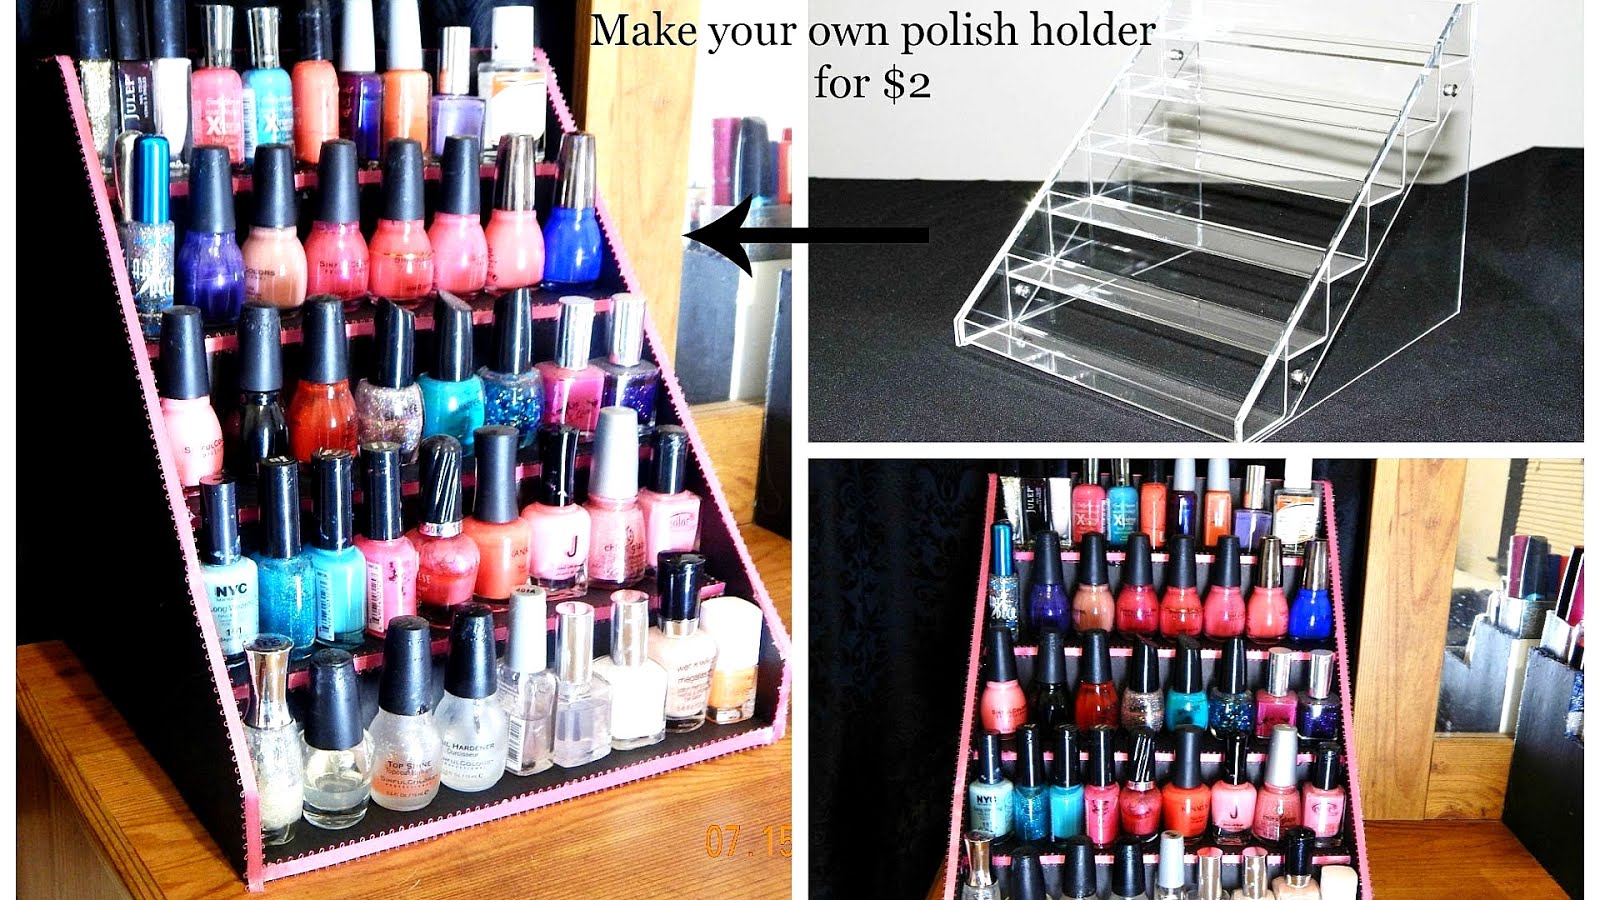 3. DIY nail polish shelf - wide 6